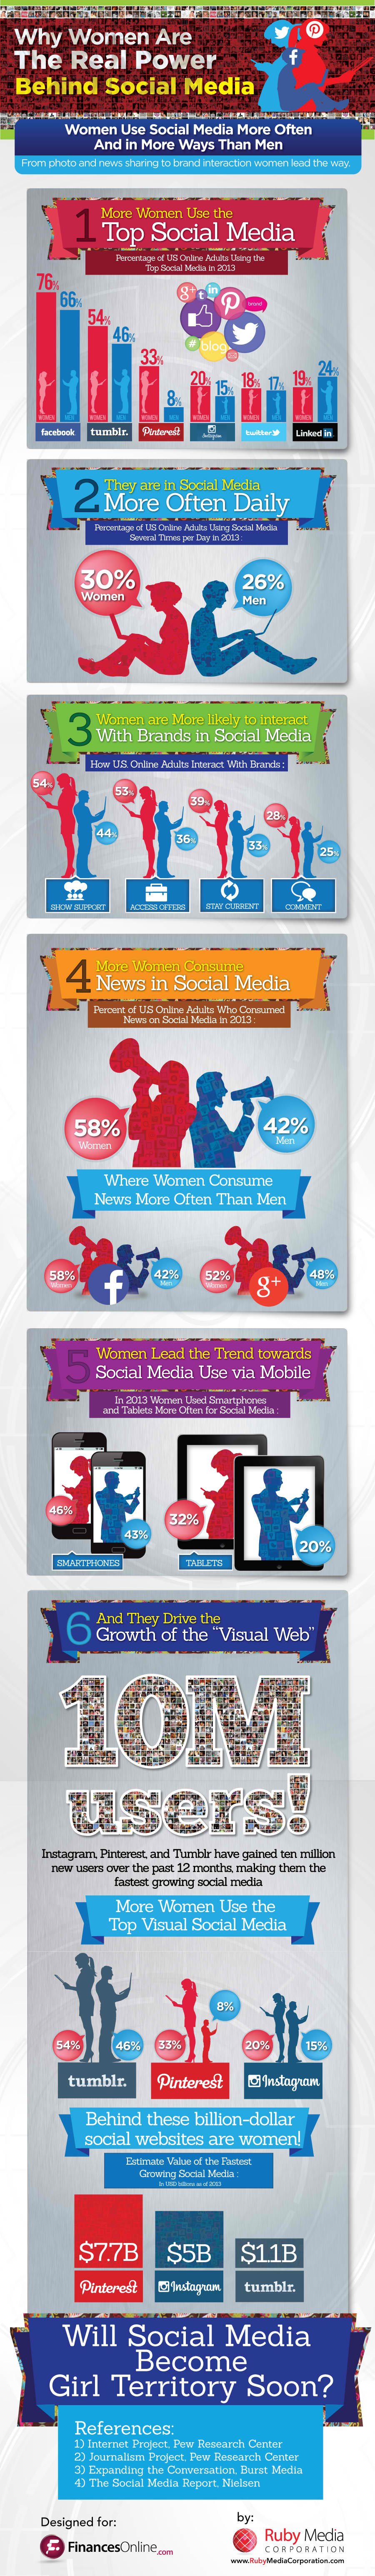 social-media-infographic